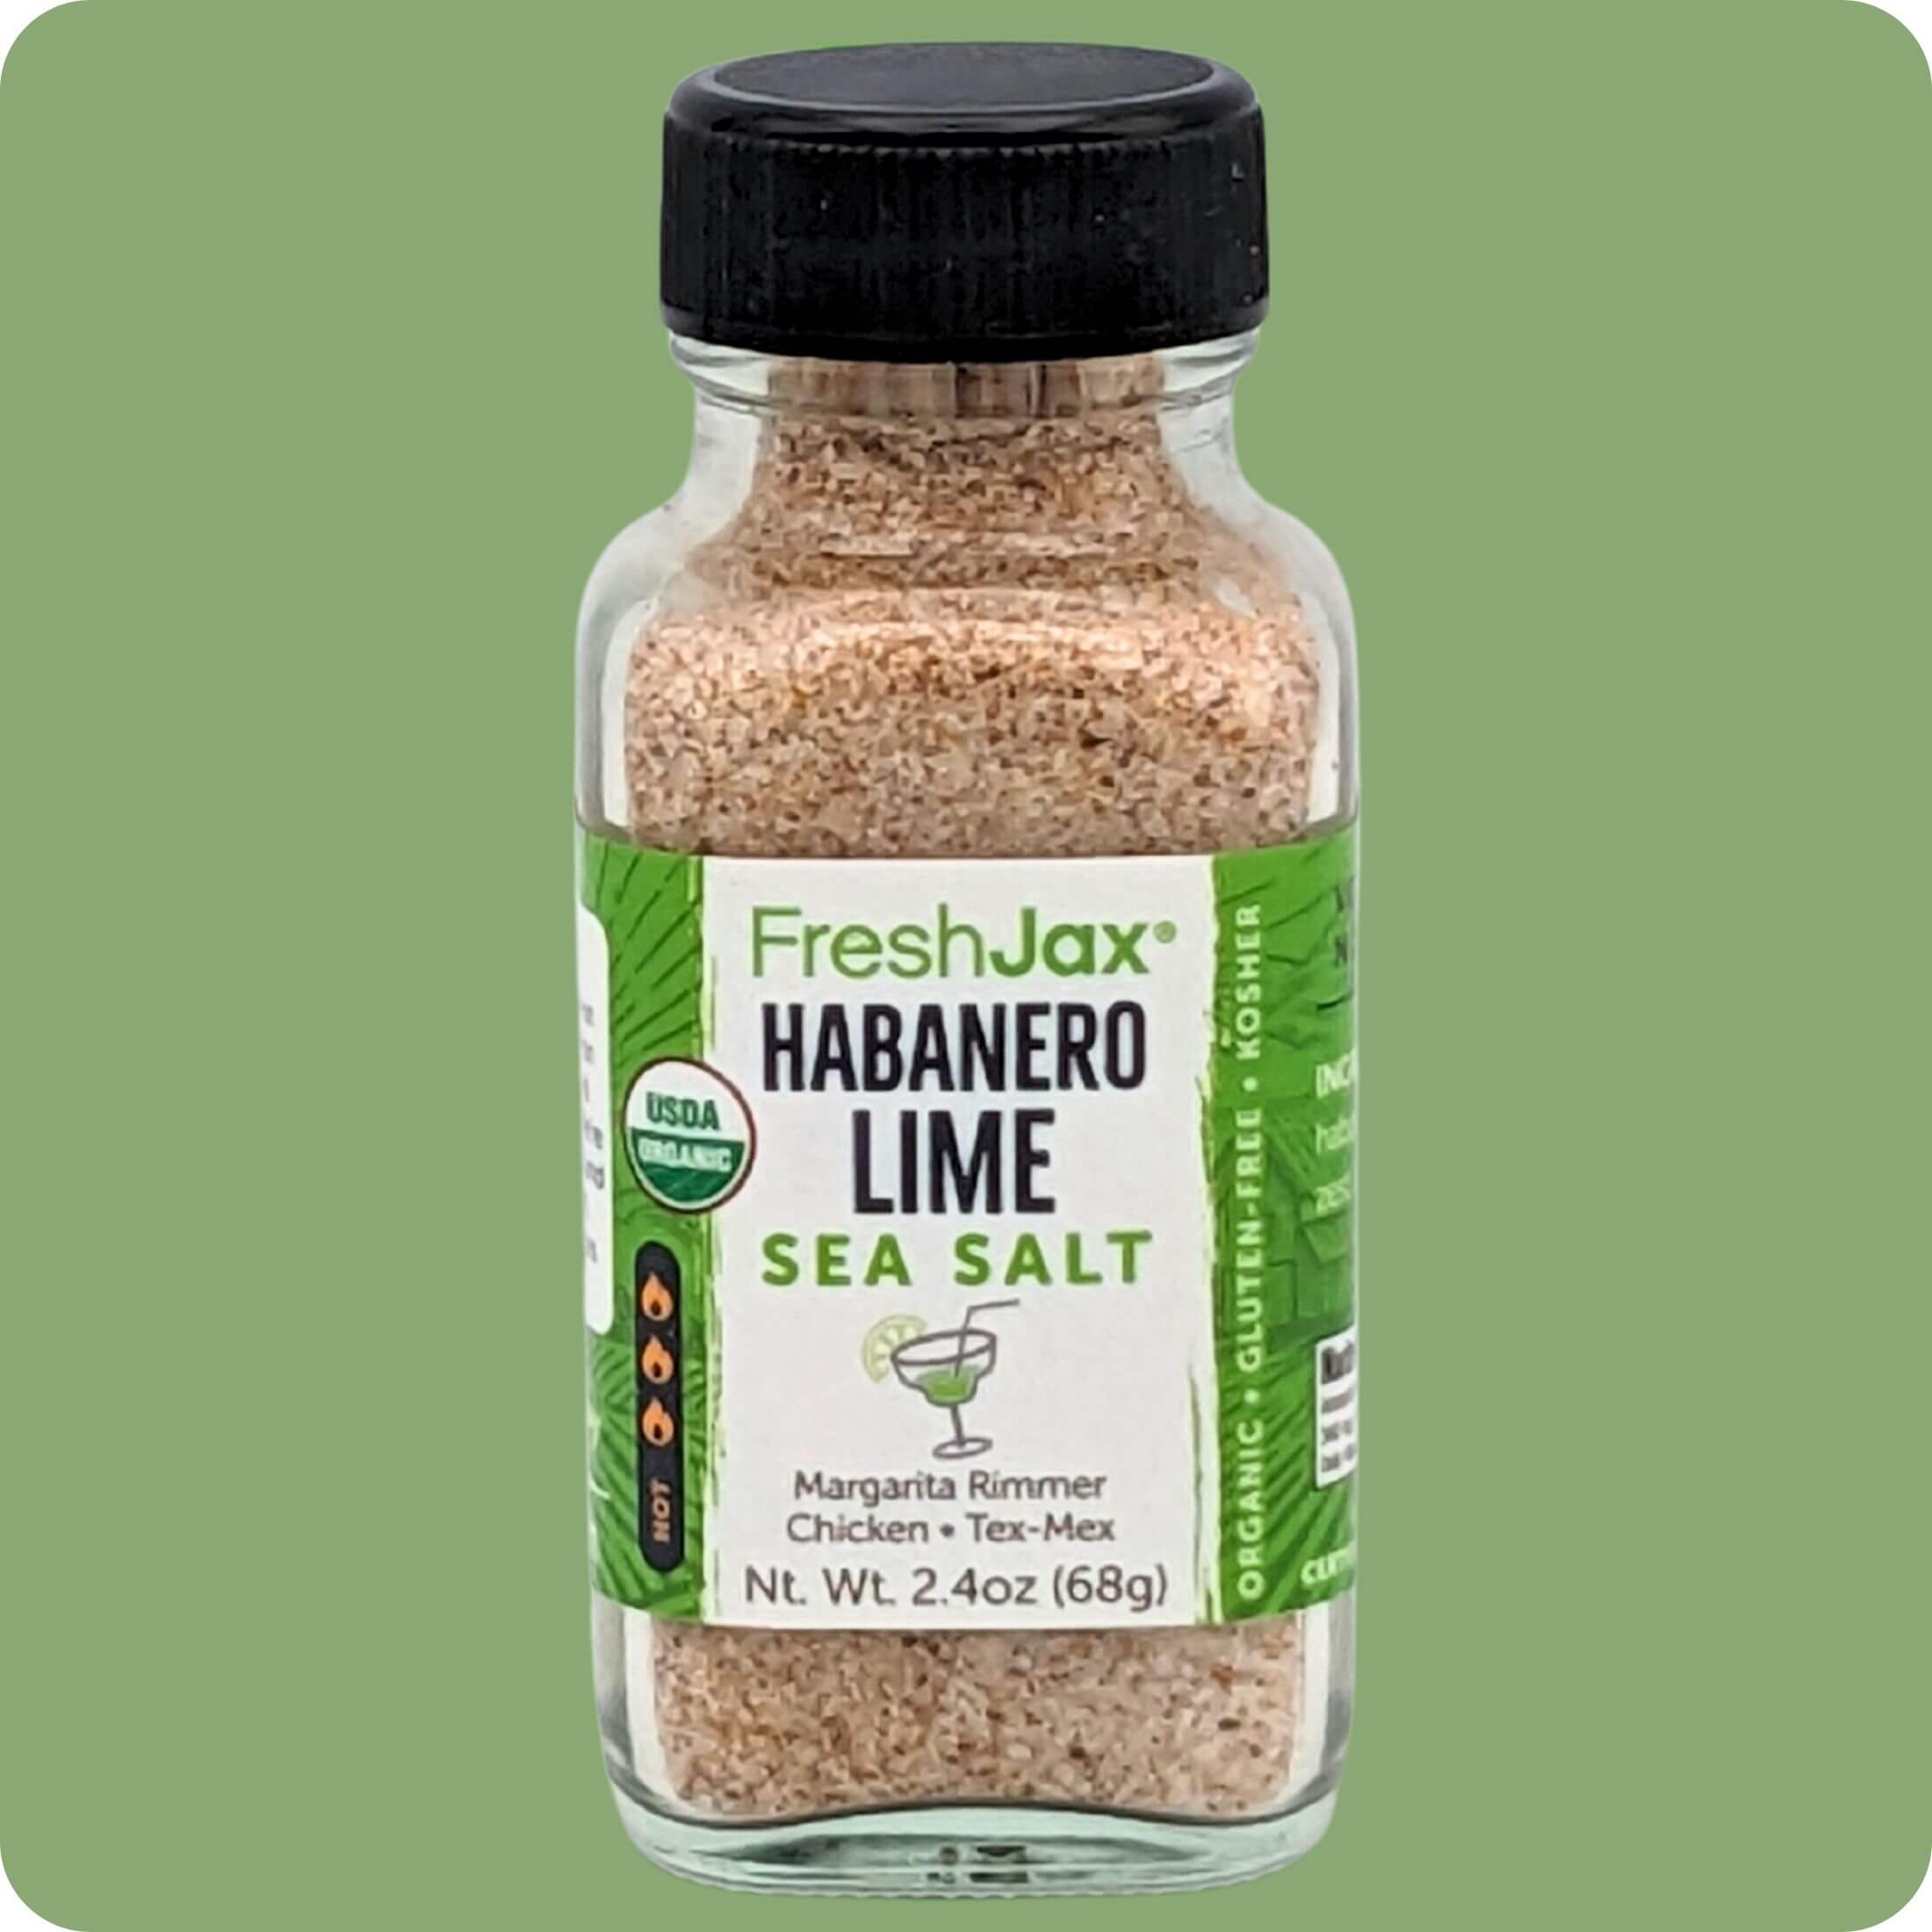 Sampler Sized habanero Lime Sea Salt